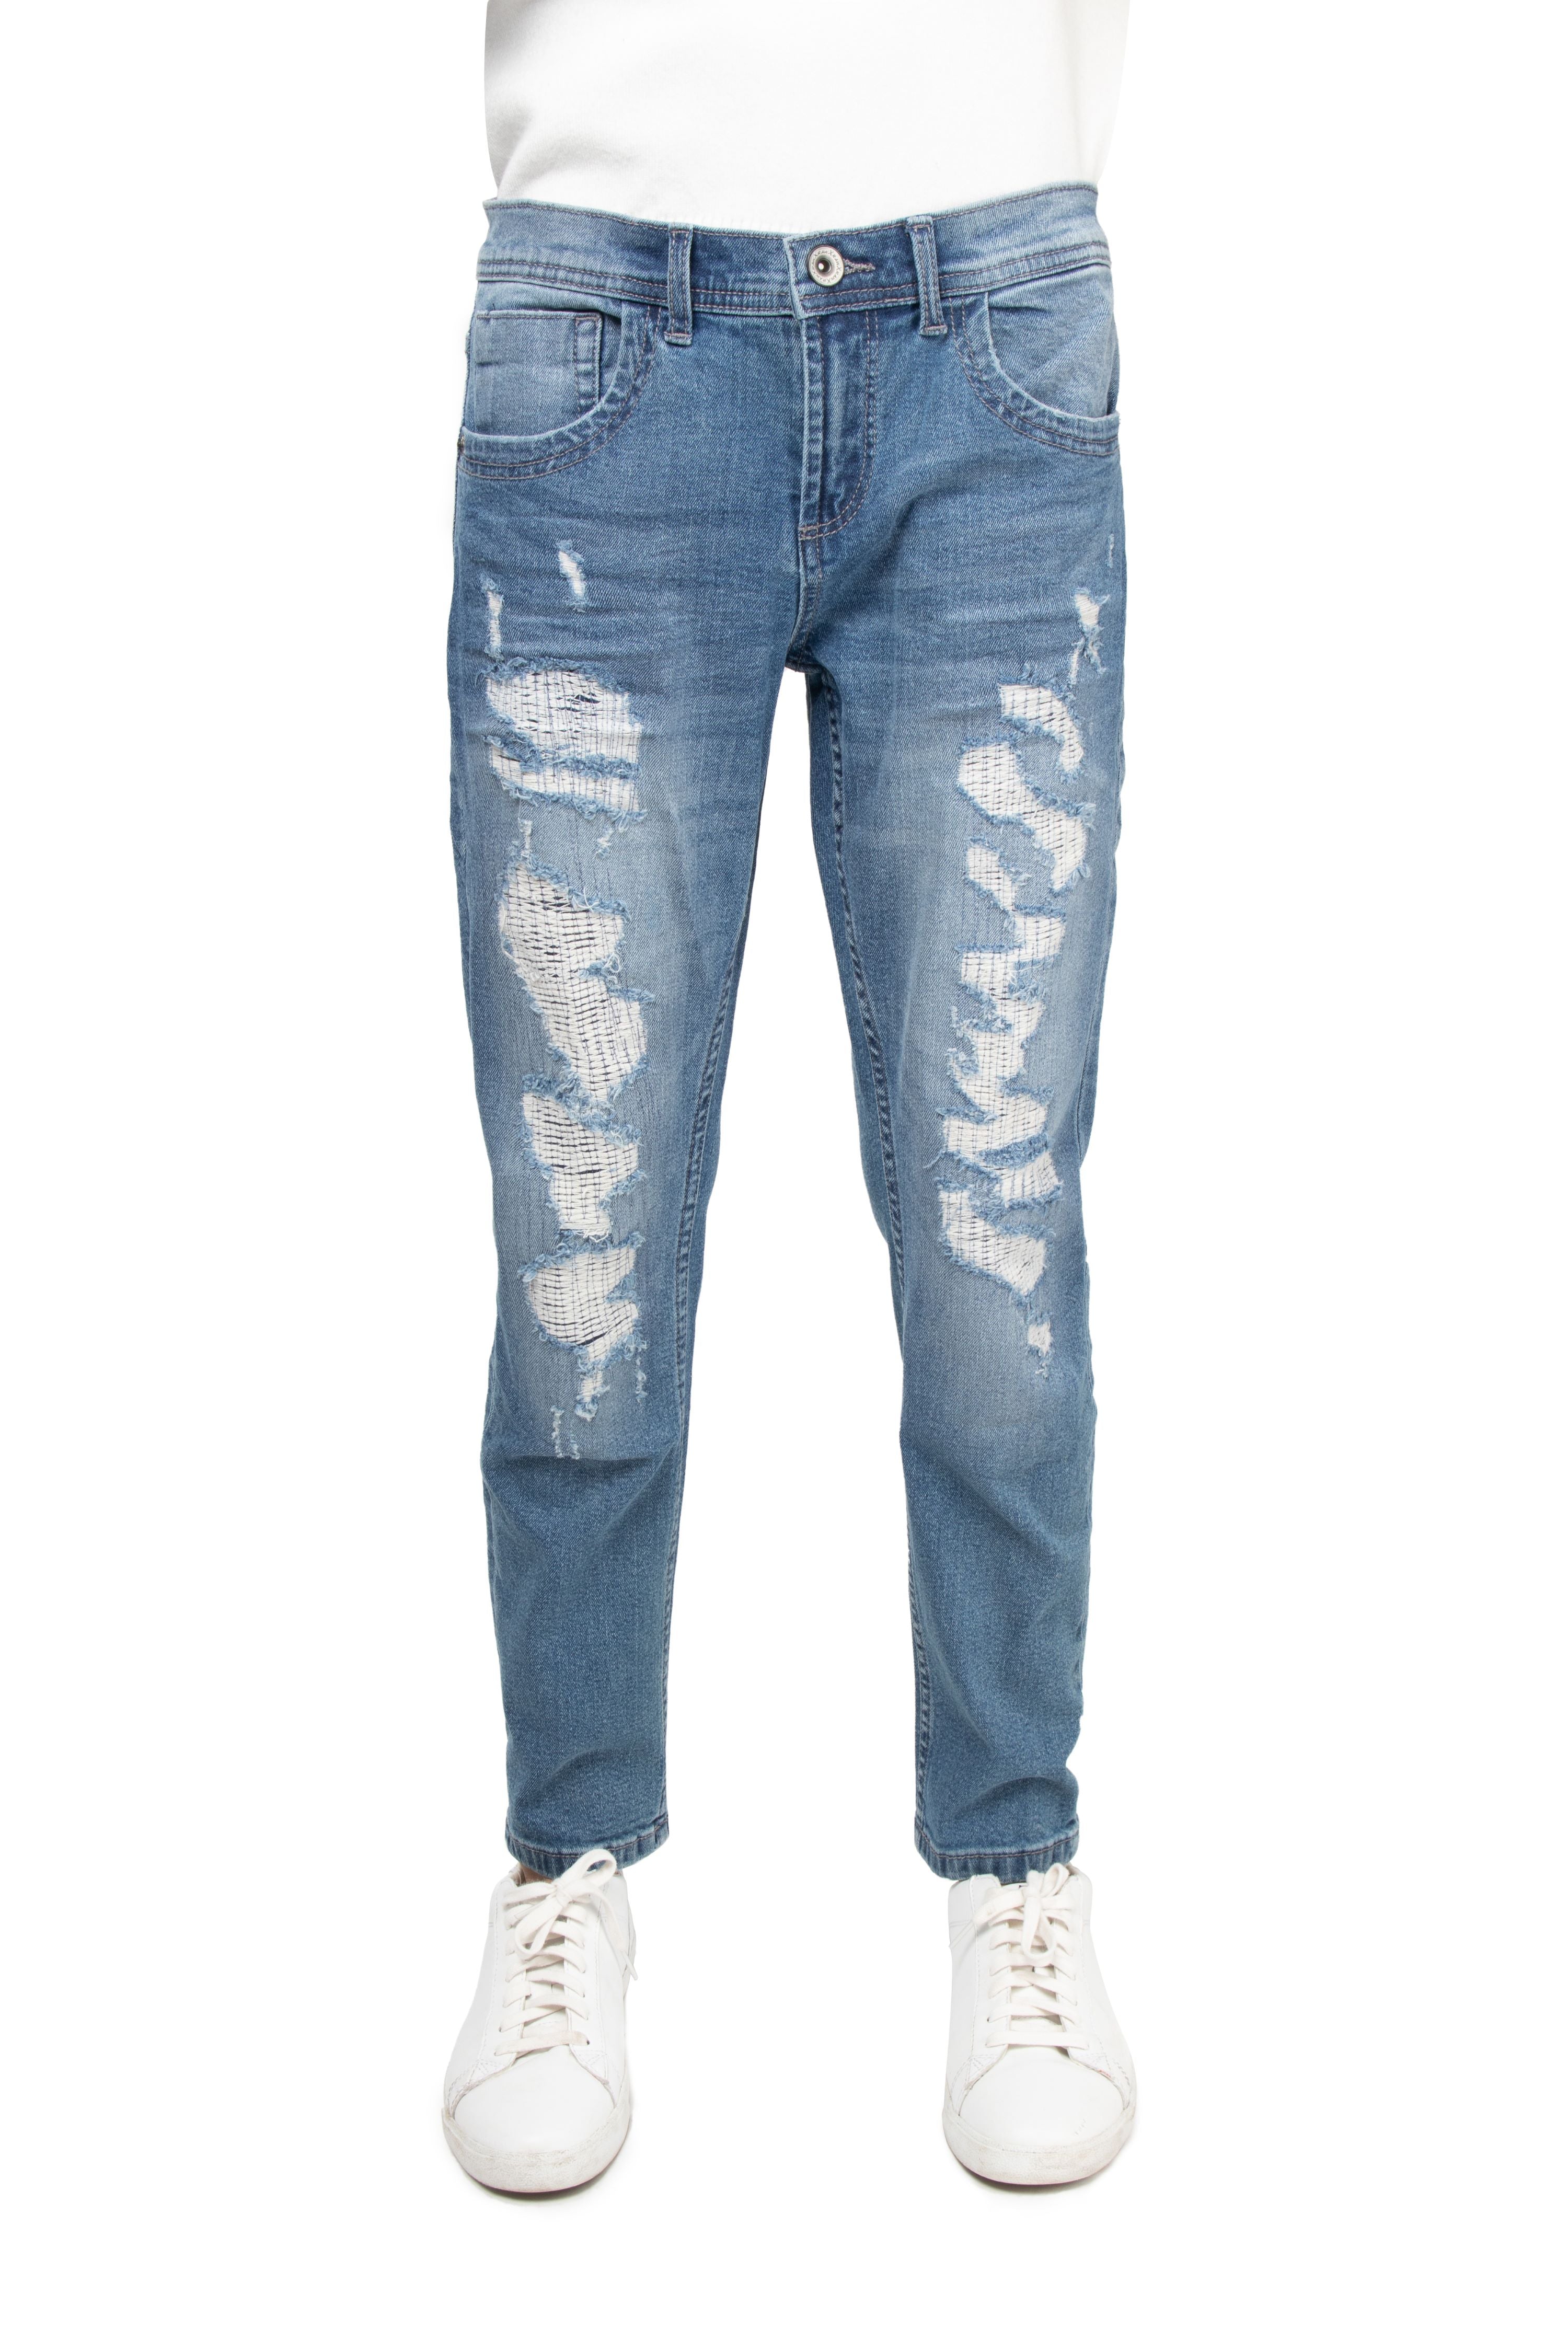 X RAY Skinny Jeans for Boys Slim Fit Denim Pants, Dark Blue